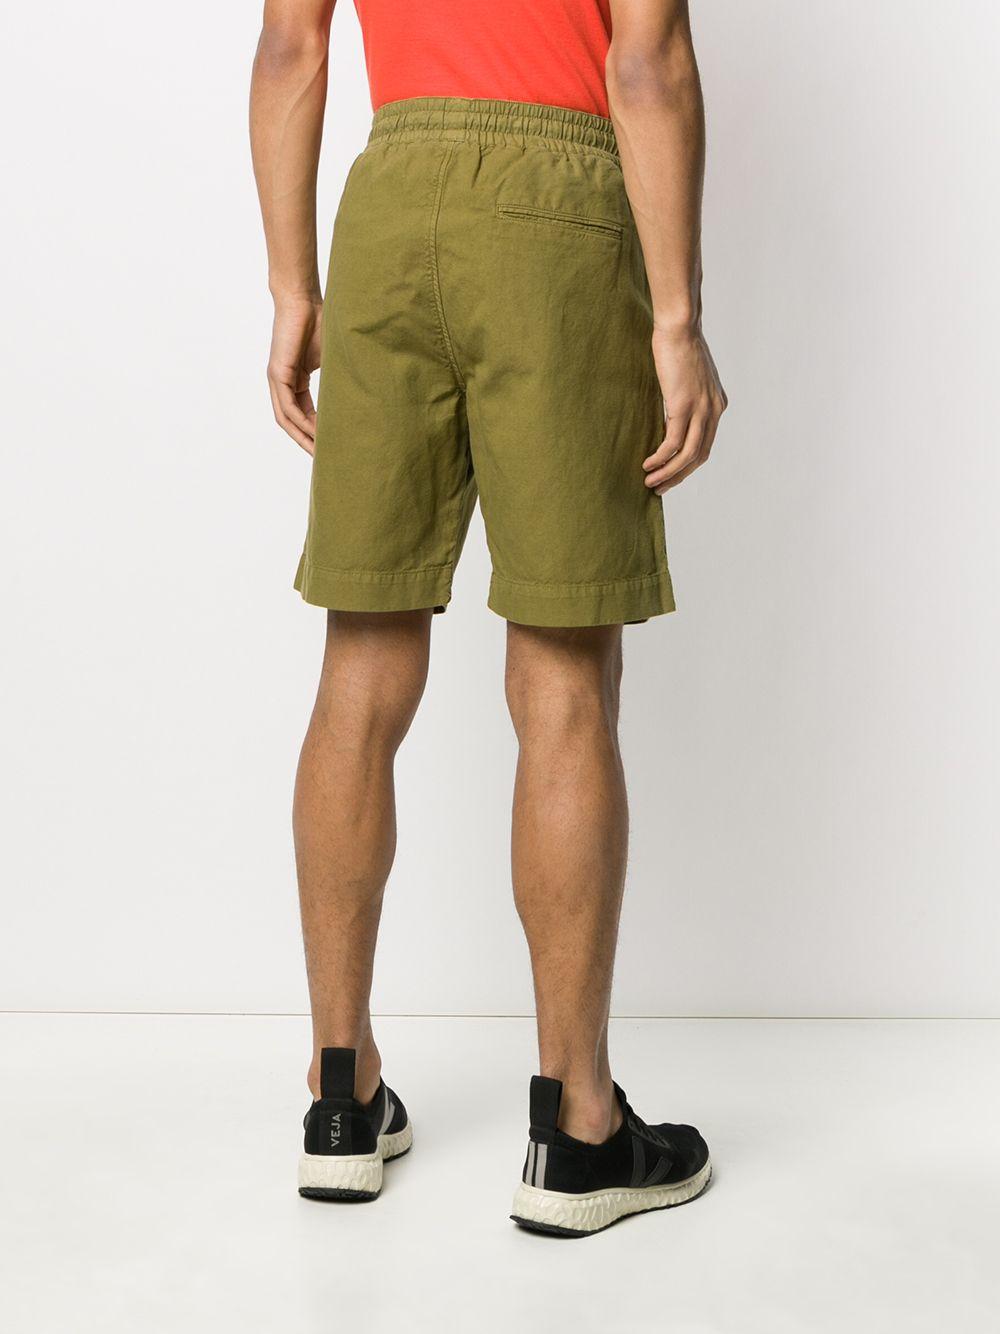 YMC Cotton Drawstring Shorts in Green for Men - Lyst